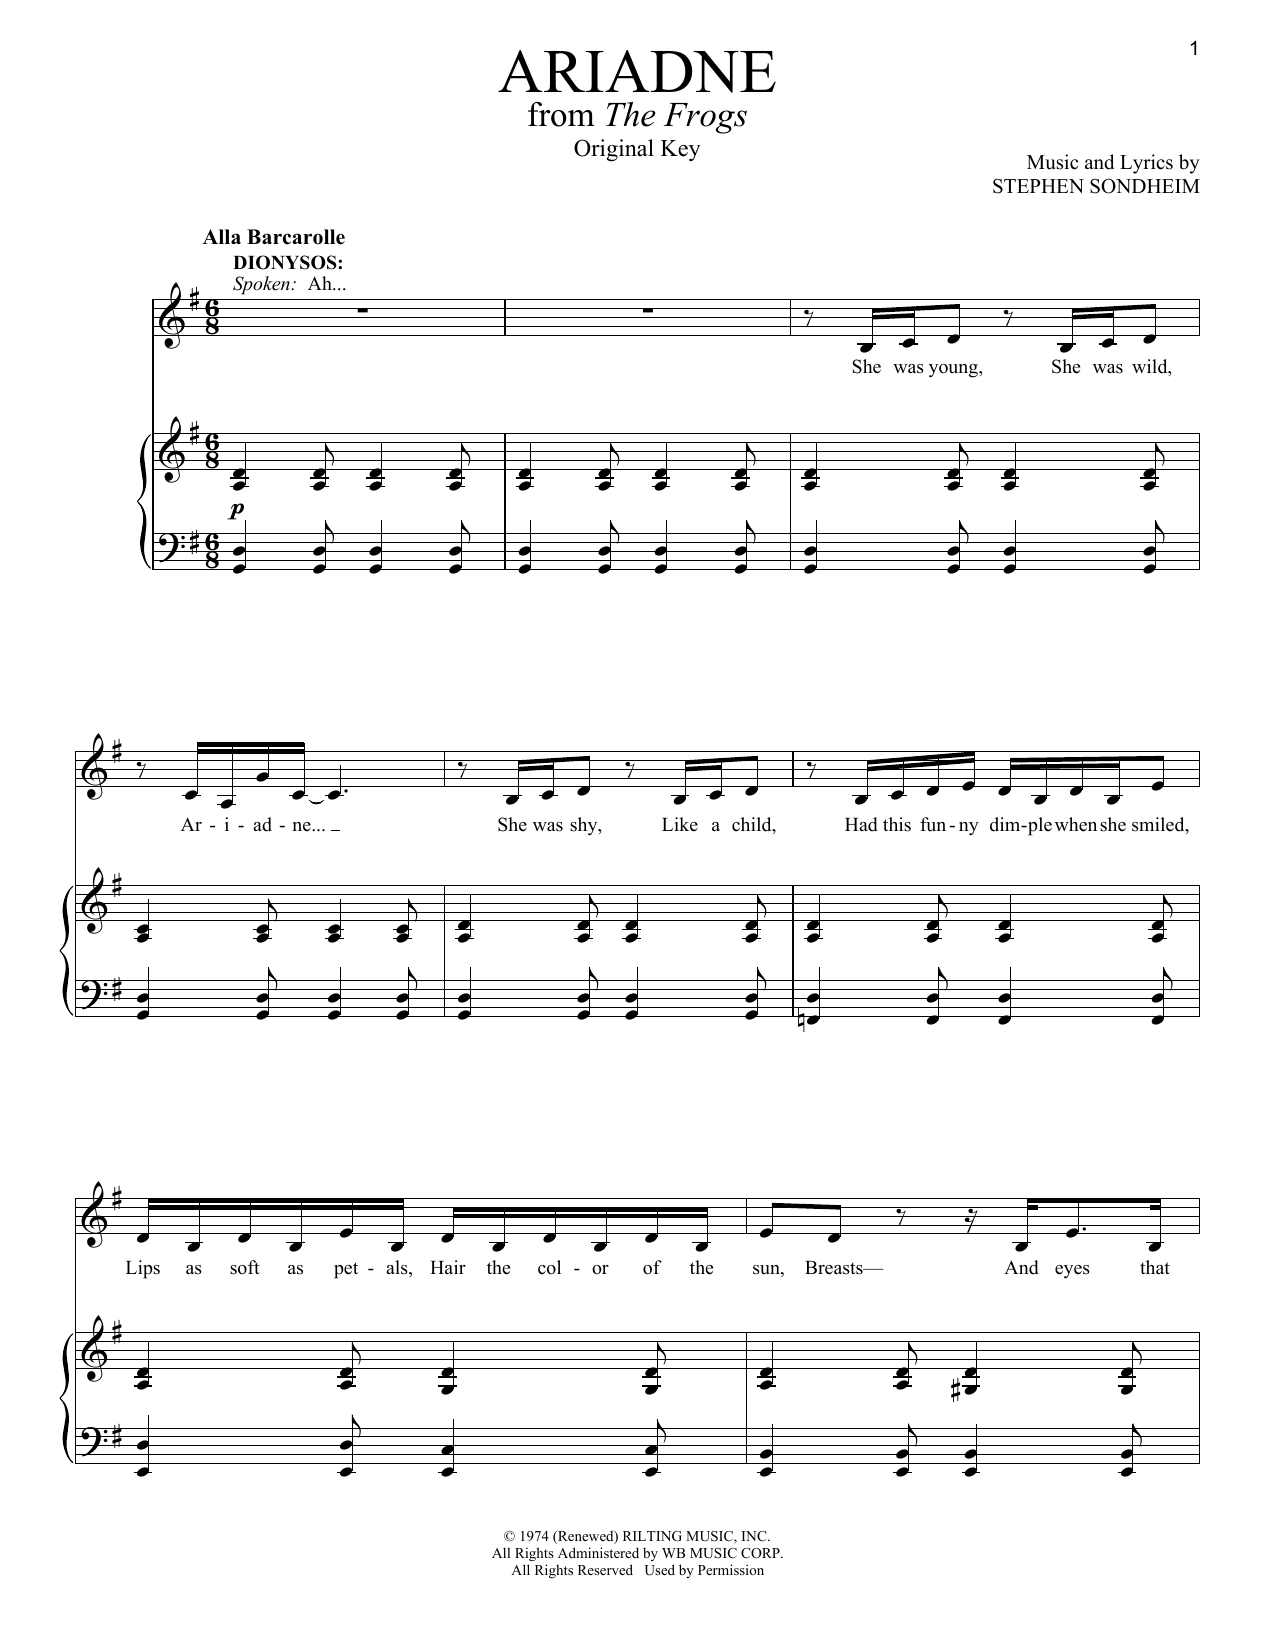 Stephen Sondheim Ariadne Sheet Music Notes & Chords for Piano & Vocal - Download or Print PDF